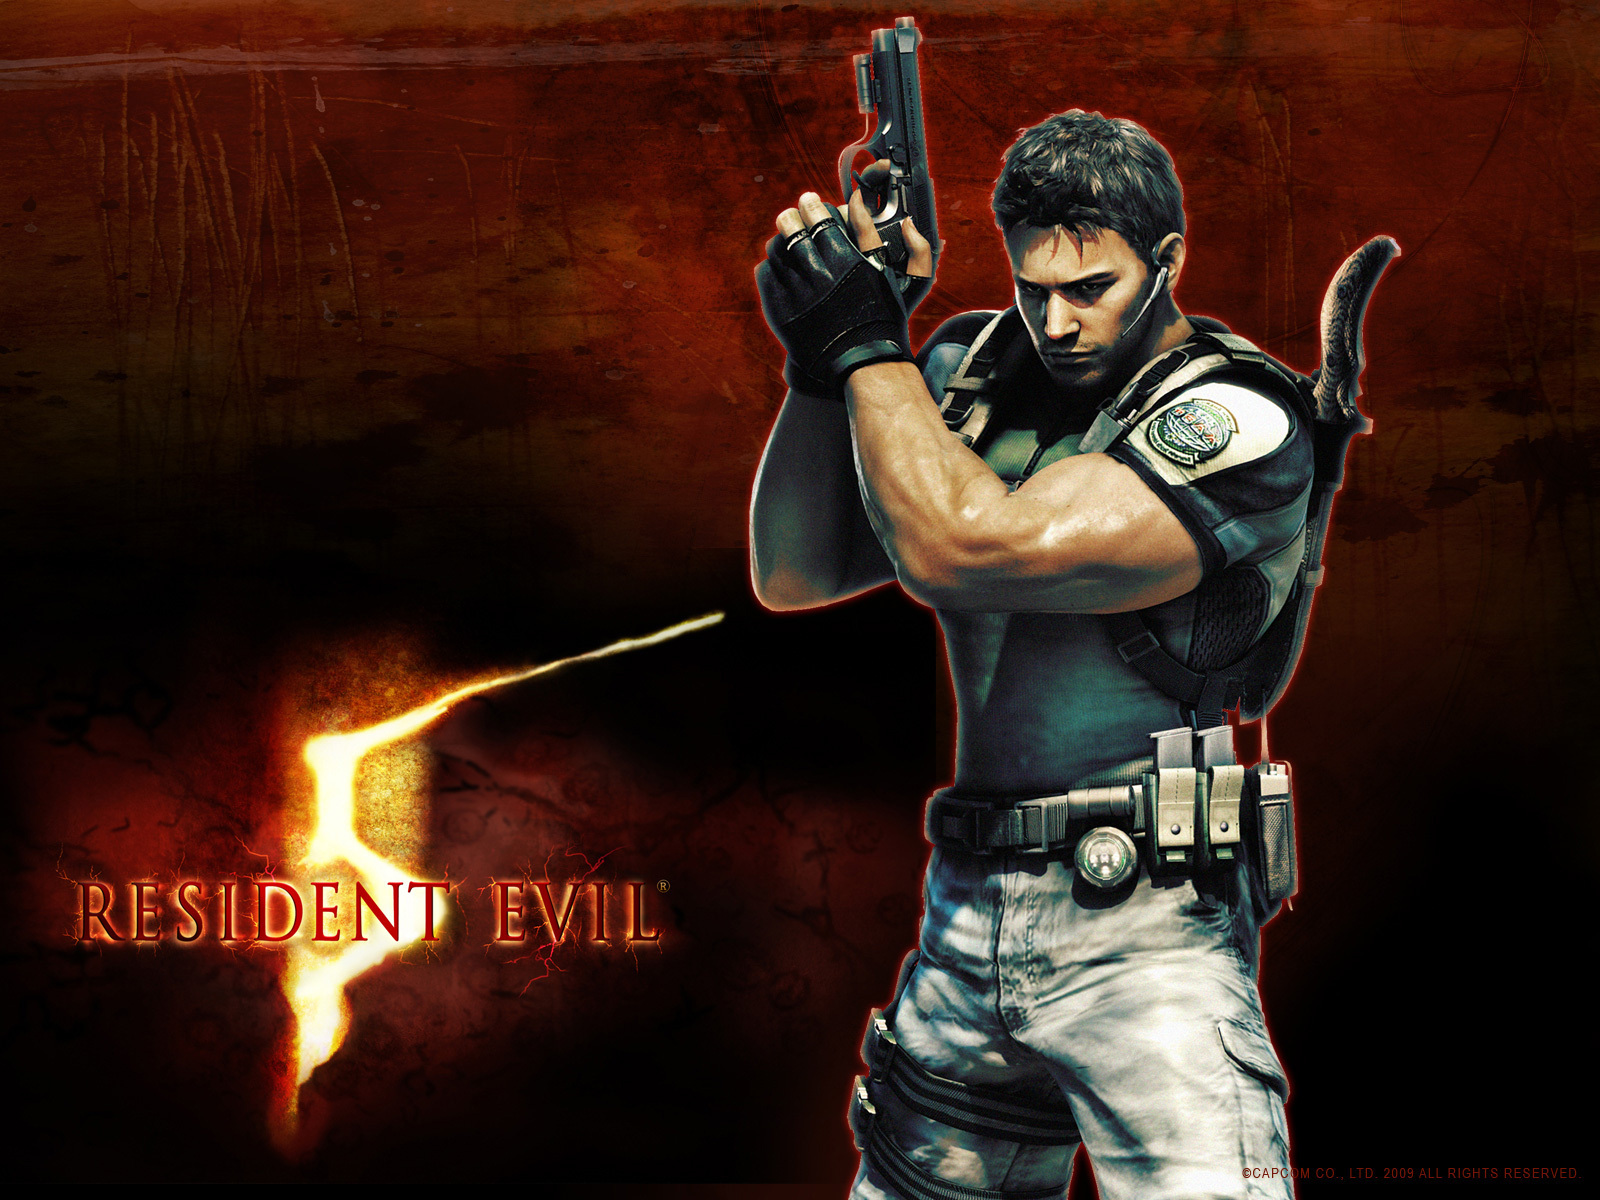 Resident Evil 5 Pc Game Highly Compressed Mediafire - MediaFireFile ...